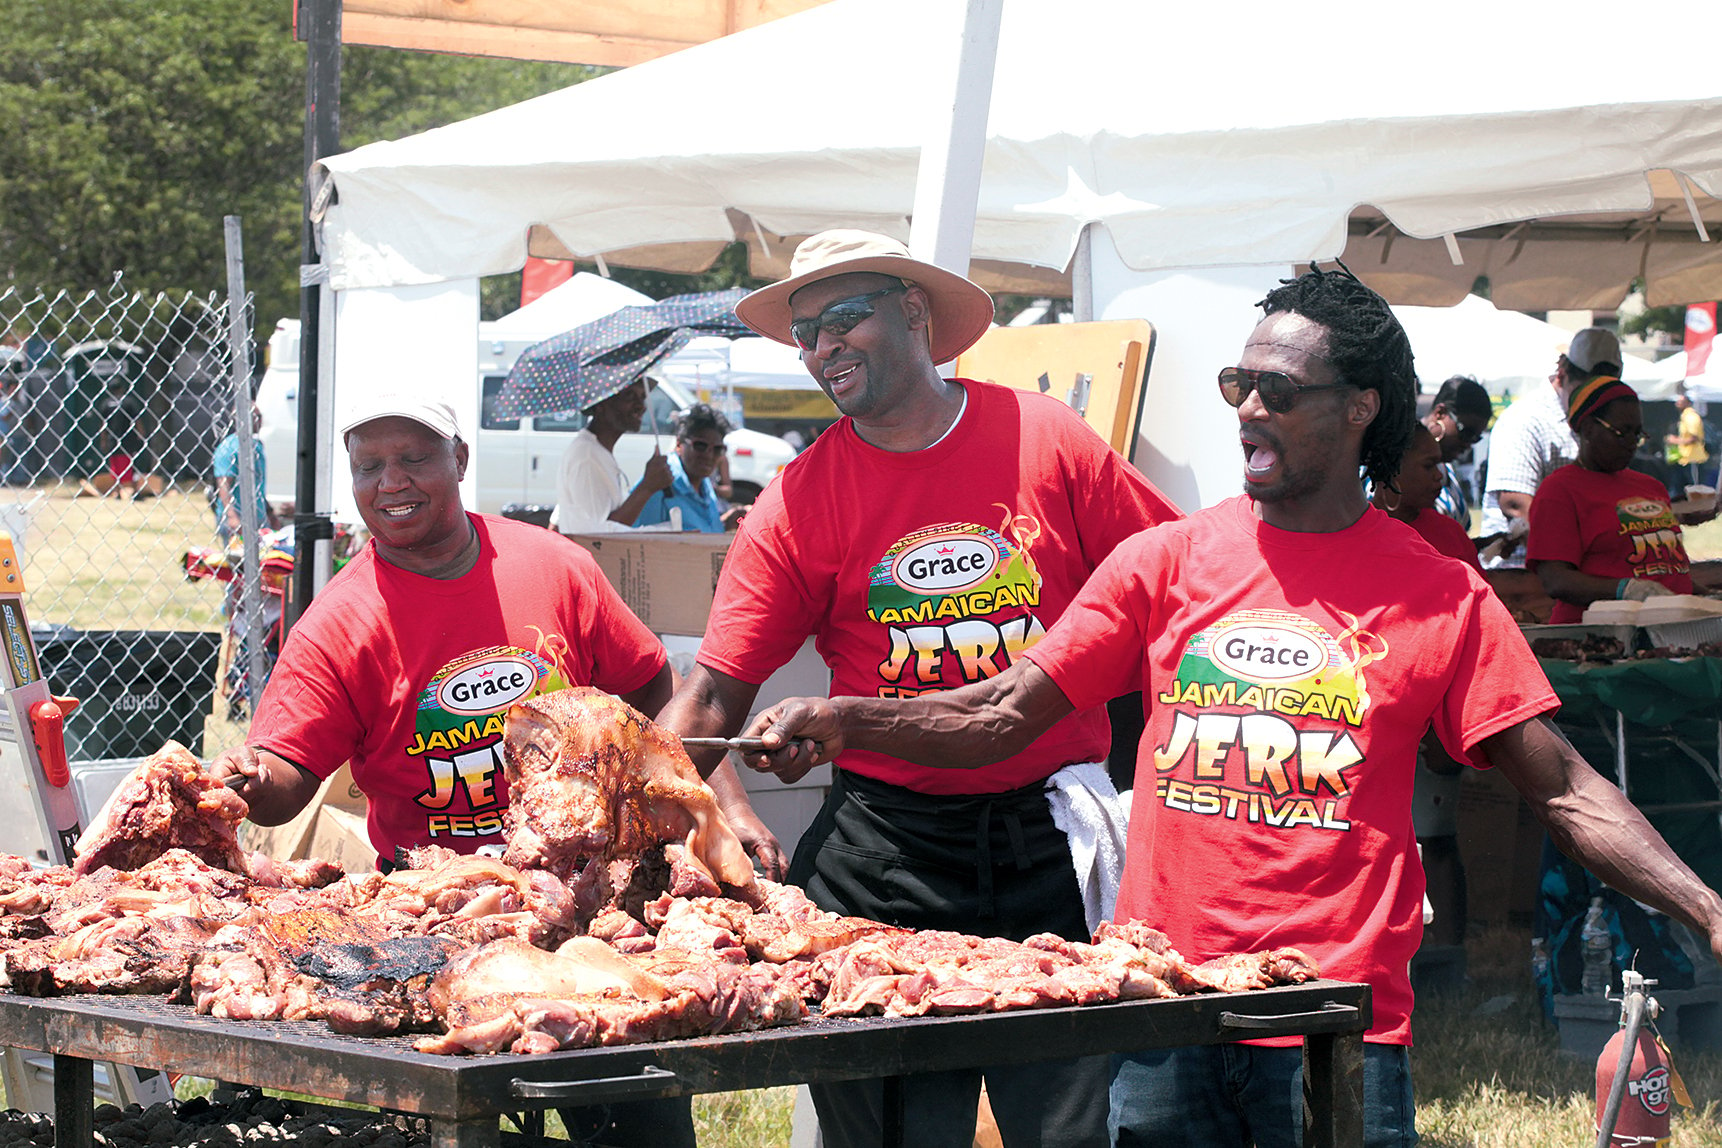 Photograph of Grace Jamaican Jerk Festival by Ajamu.